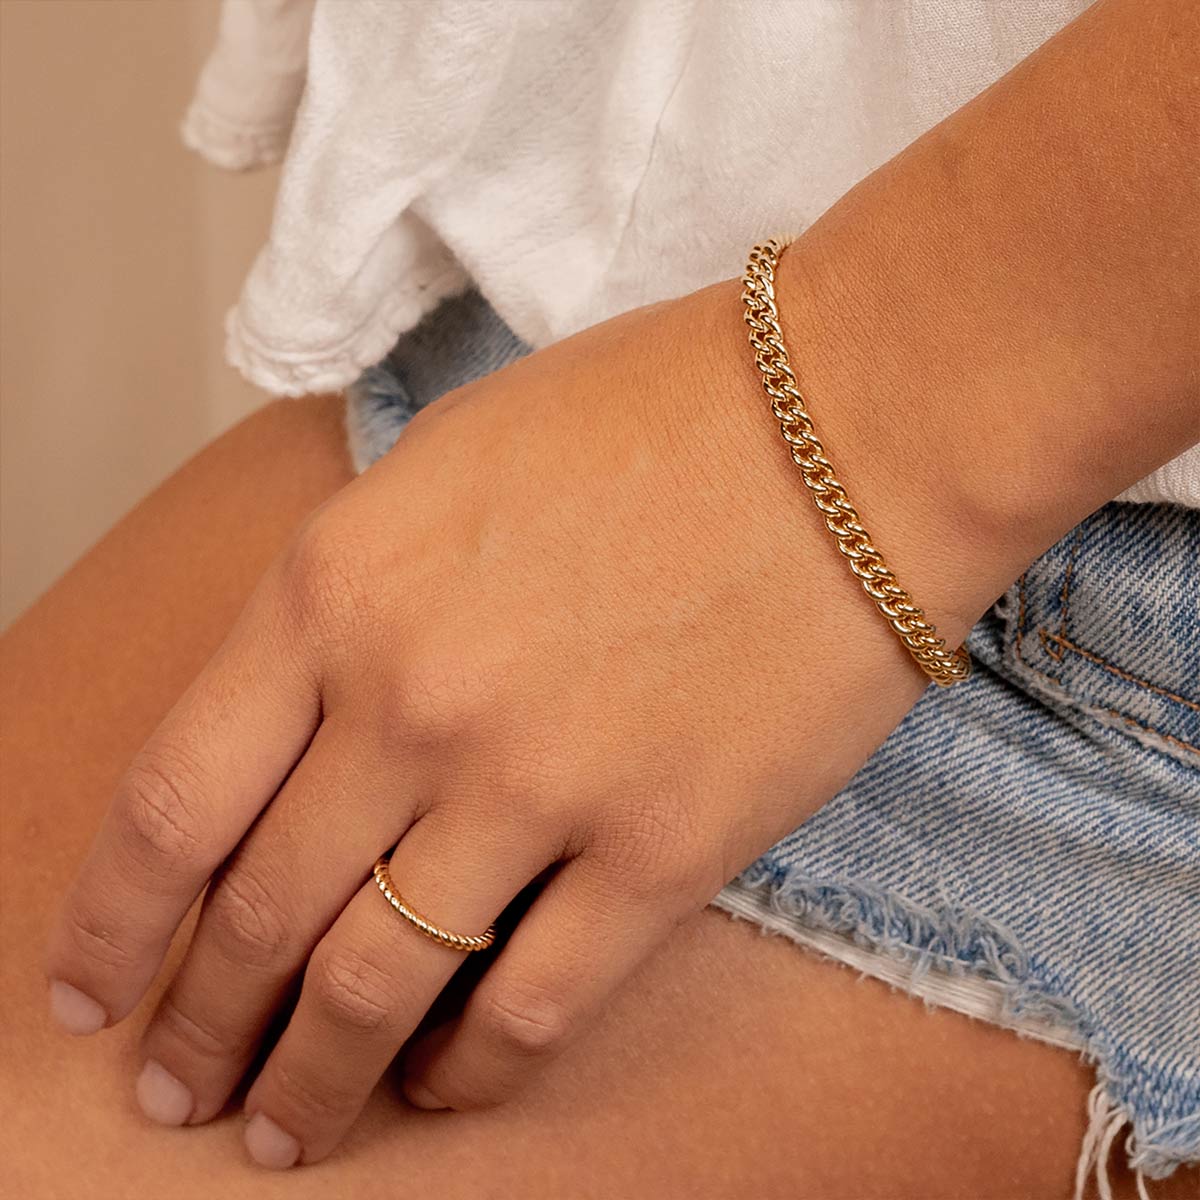 How To Find Your Bracelet Size Oldmine